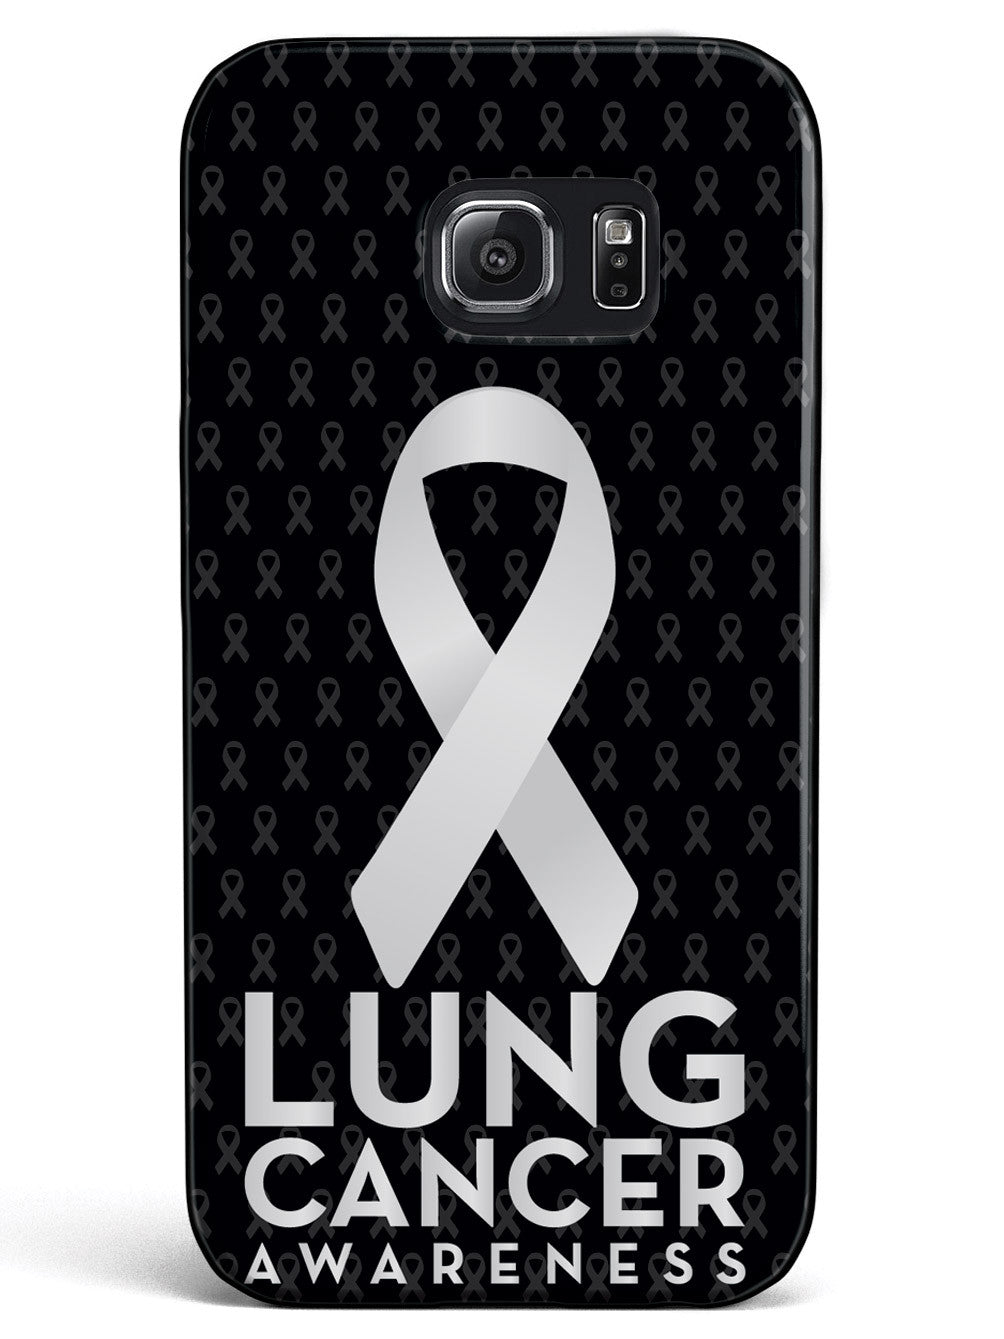 Lung Cancer Awareness - Black Case